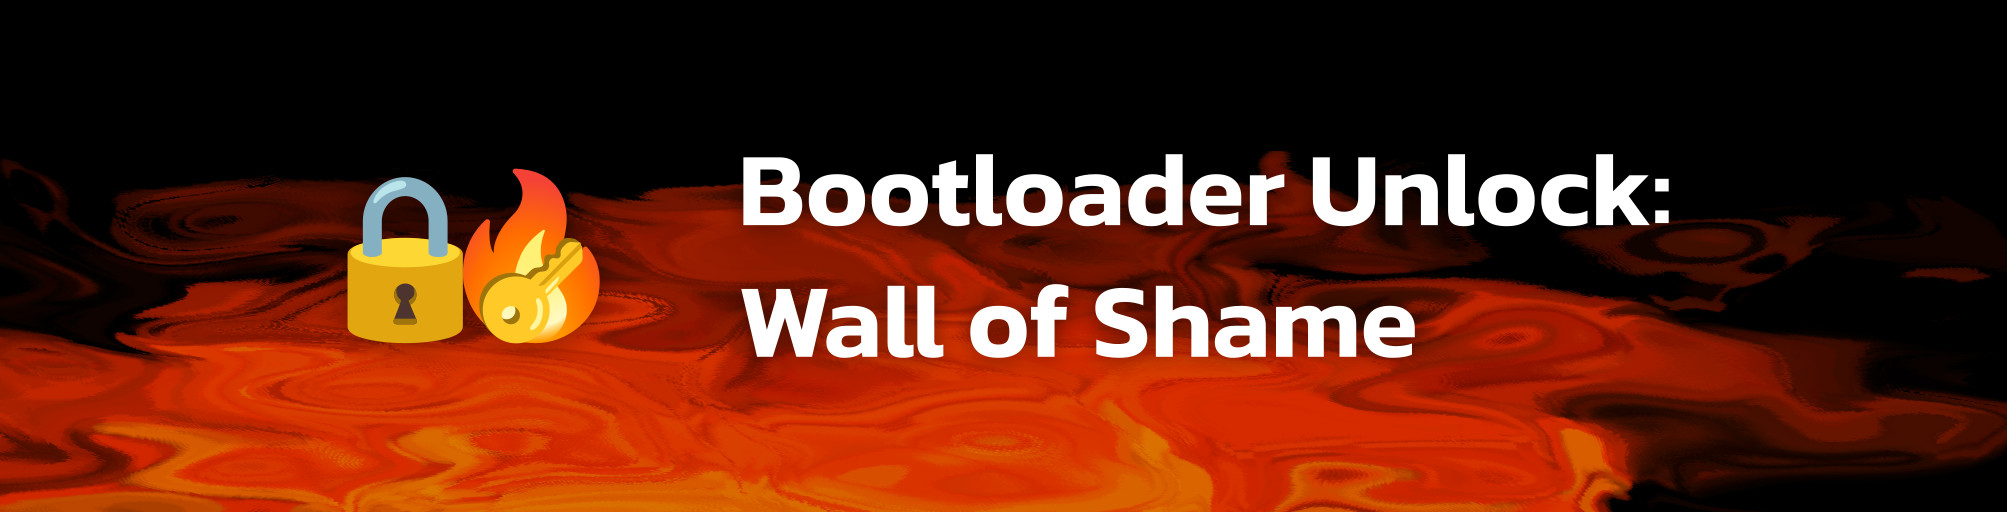 Bootloader Unlock: Wall of Shame